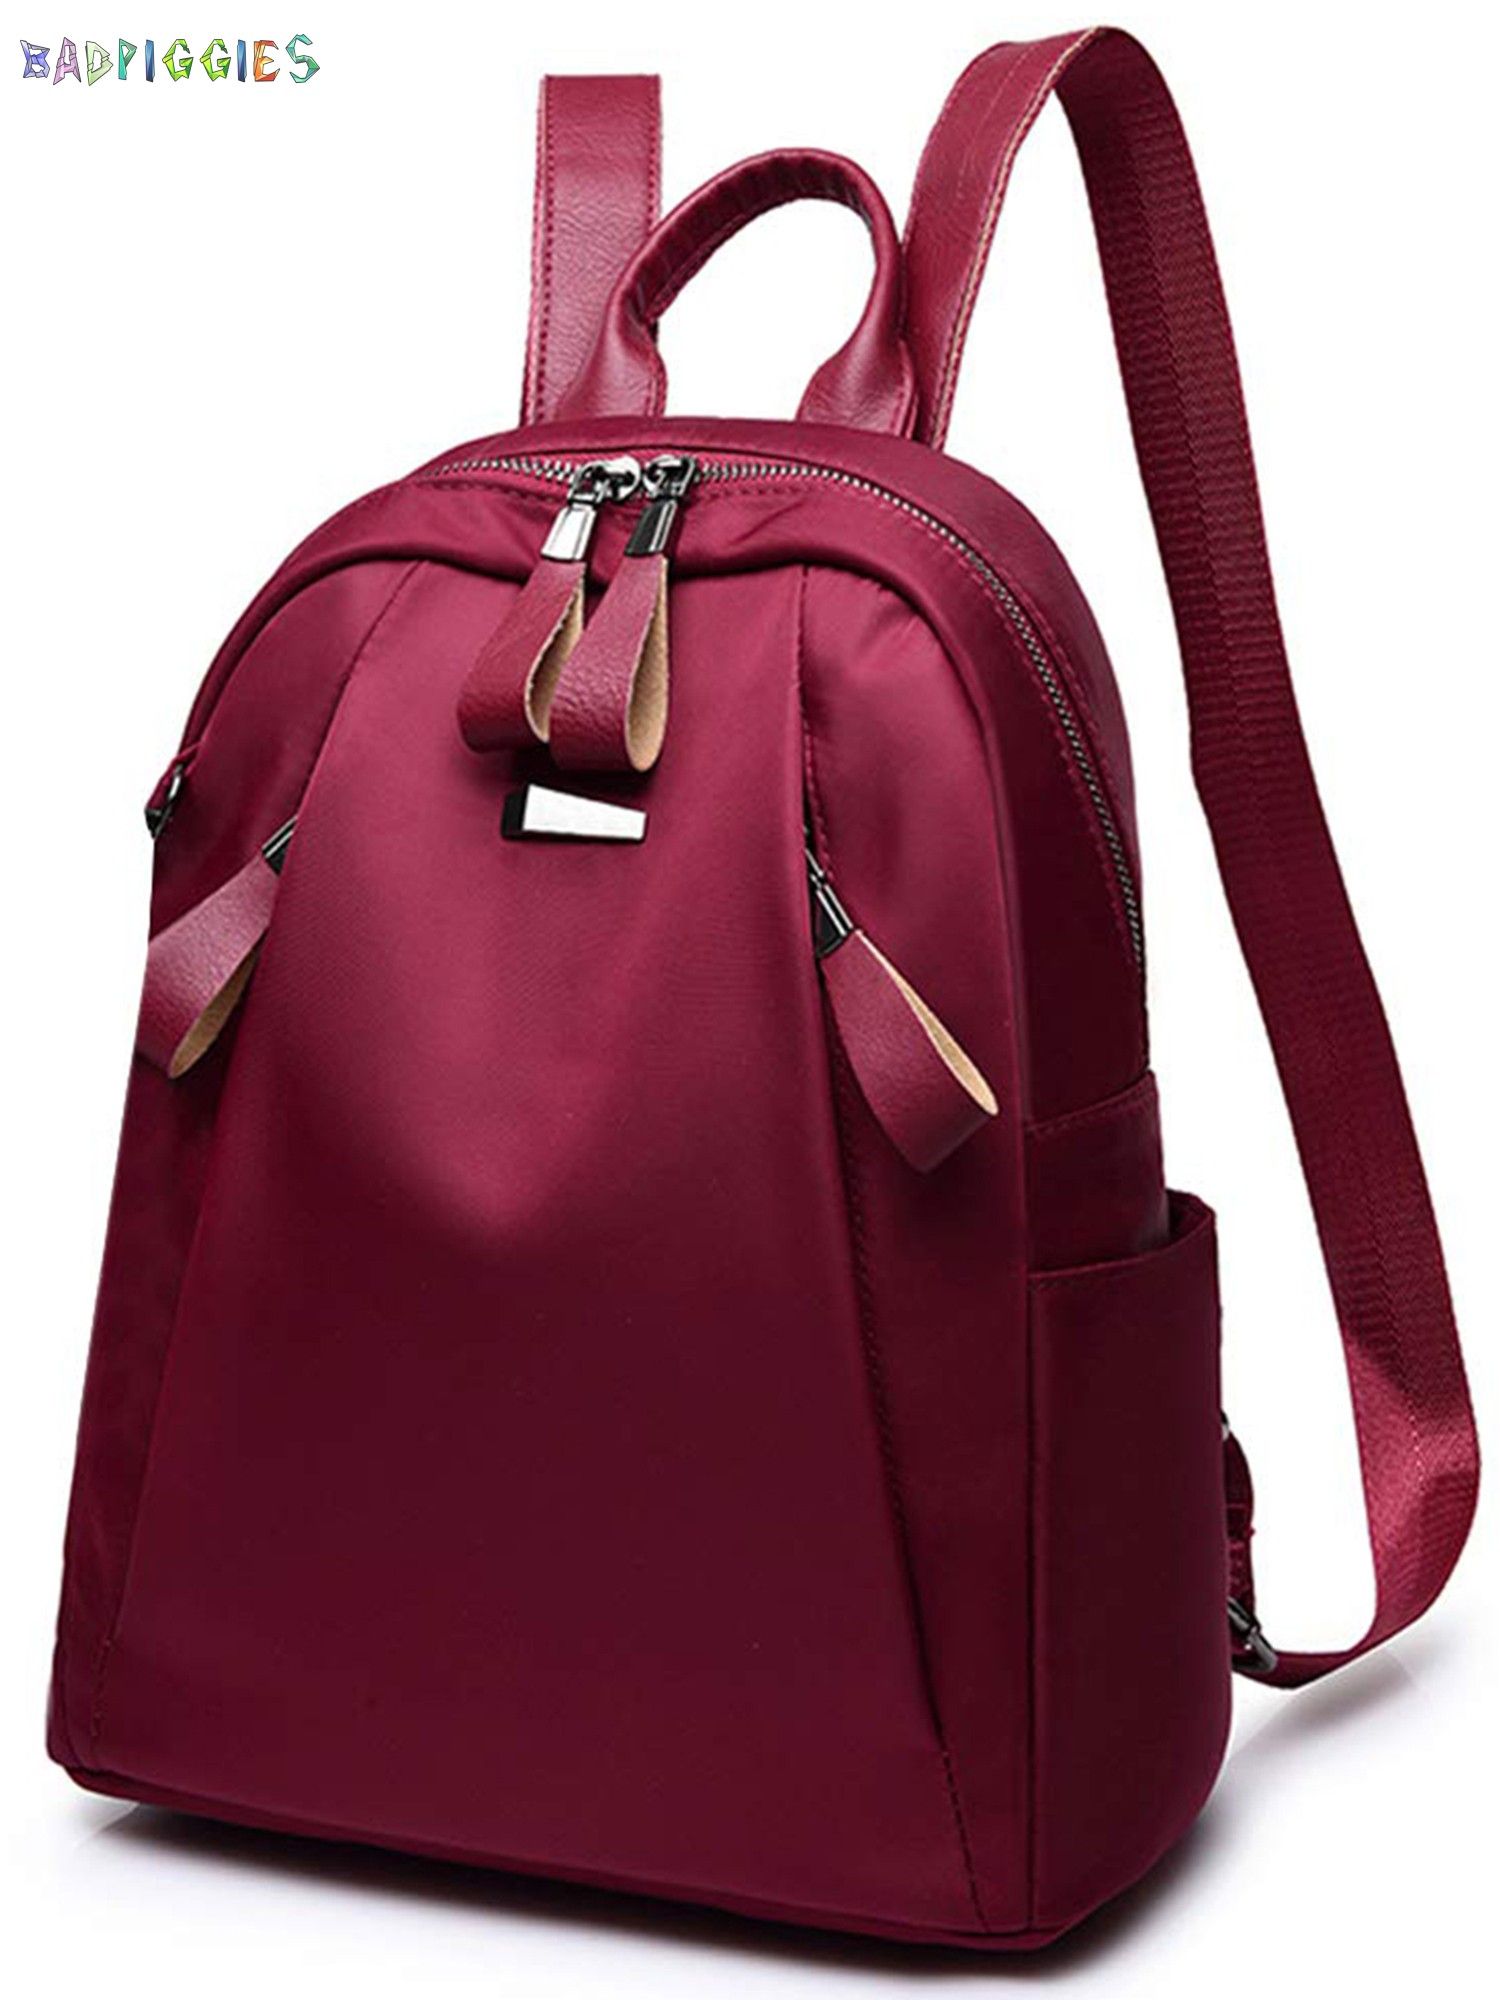 BadPiggies Women Backpack Waterproof Oxford Handbag Shoulder Travel Bag School Bag Anti-theft Rucksack - image 3 of 11